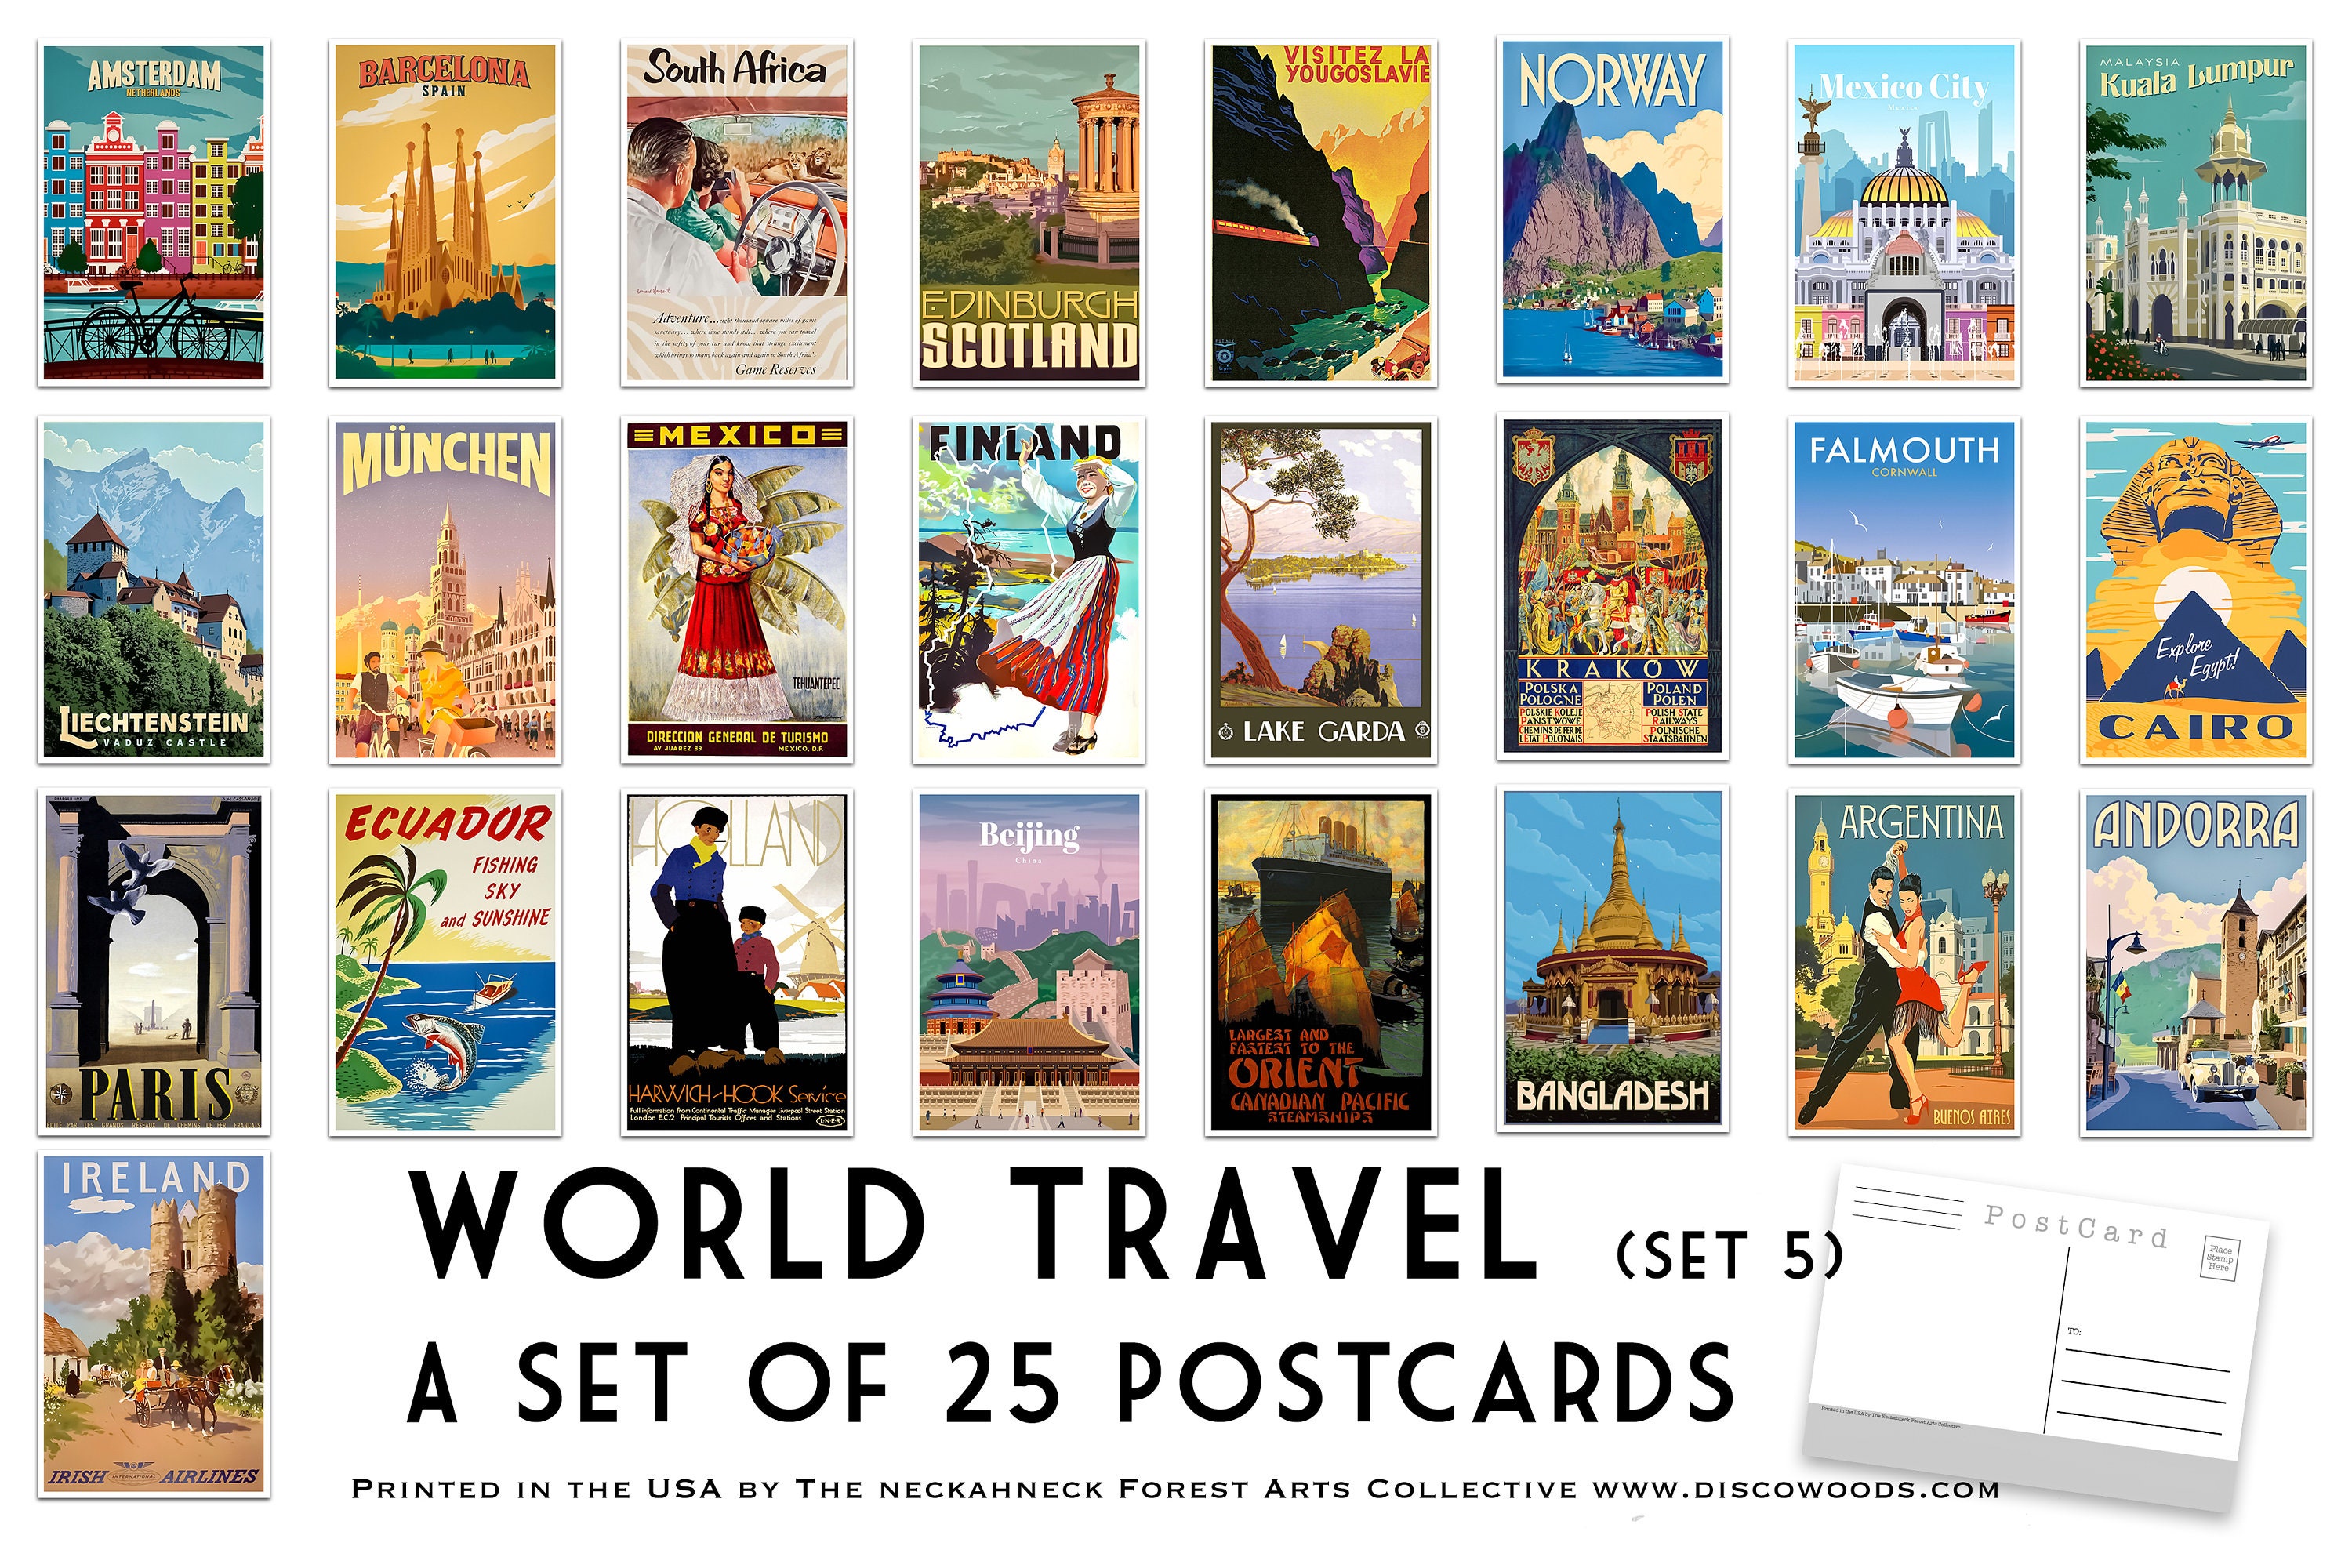 Vintage Postcard Album - Germany 1950s - Travel Memorabilia